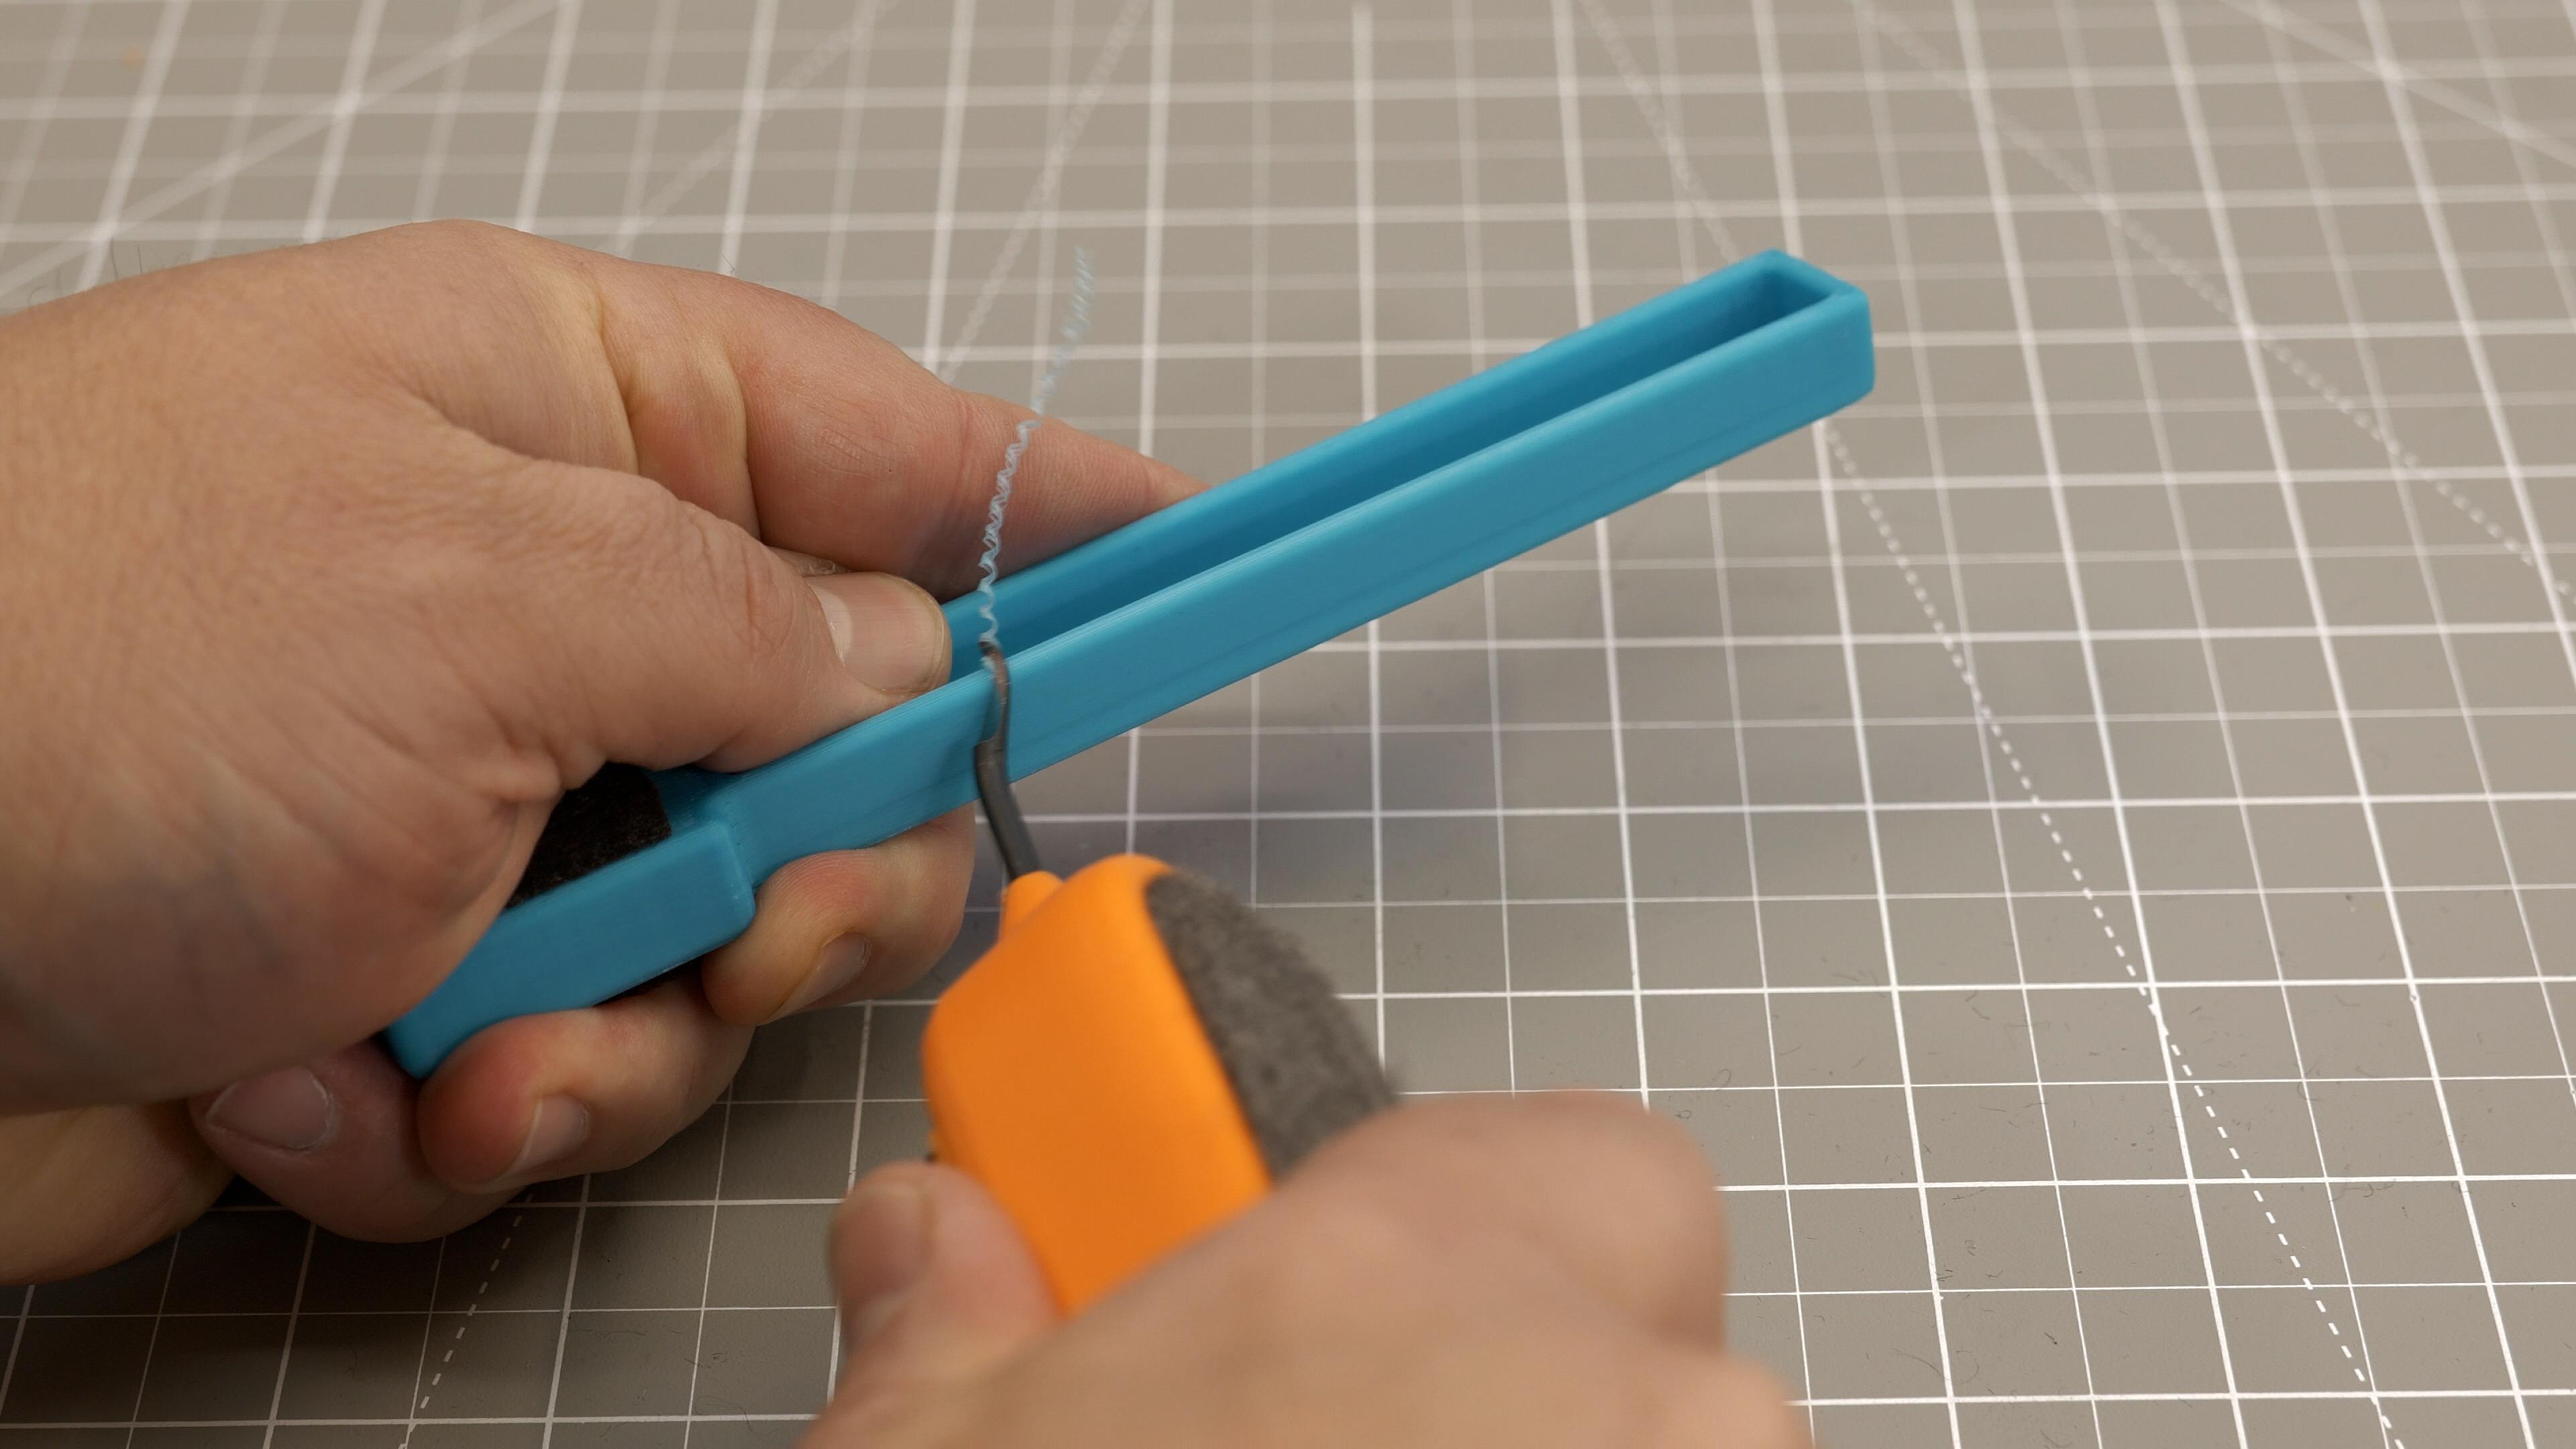 Maker Multitool - The Ultimate 3D Printing Nozzle Brush 3d model